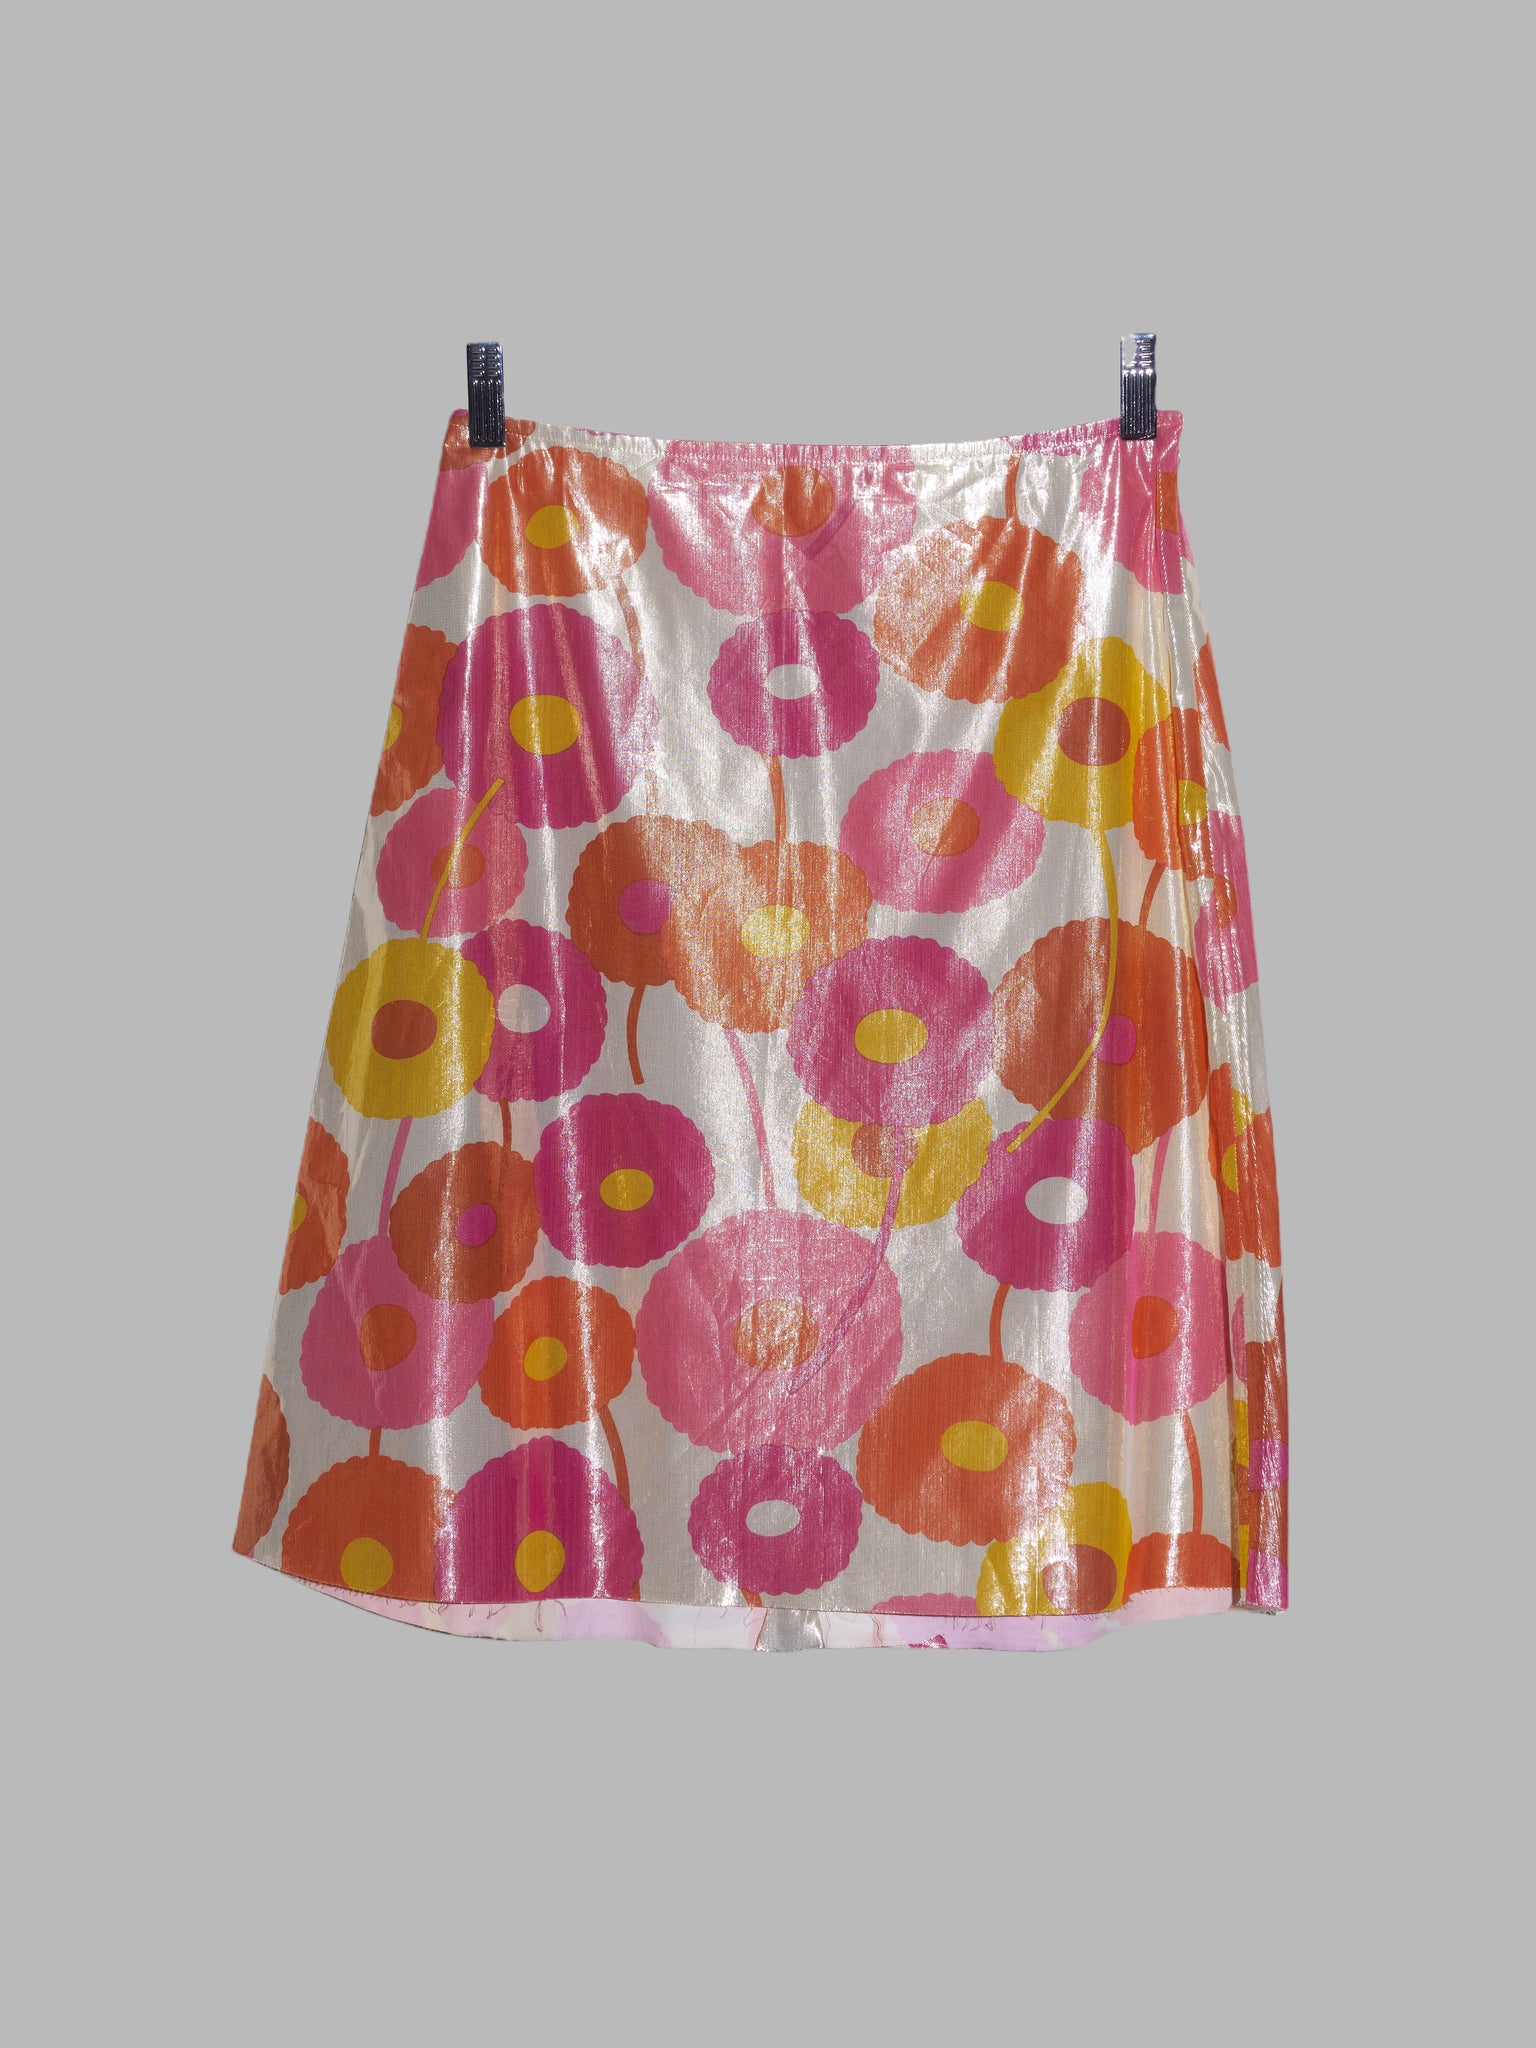 Junya Watanabe SS2000 glittery pink orange white floral waterproof skirt